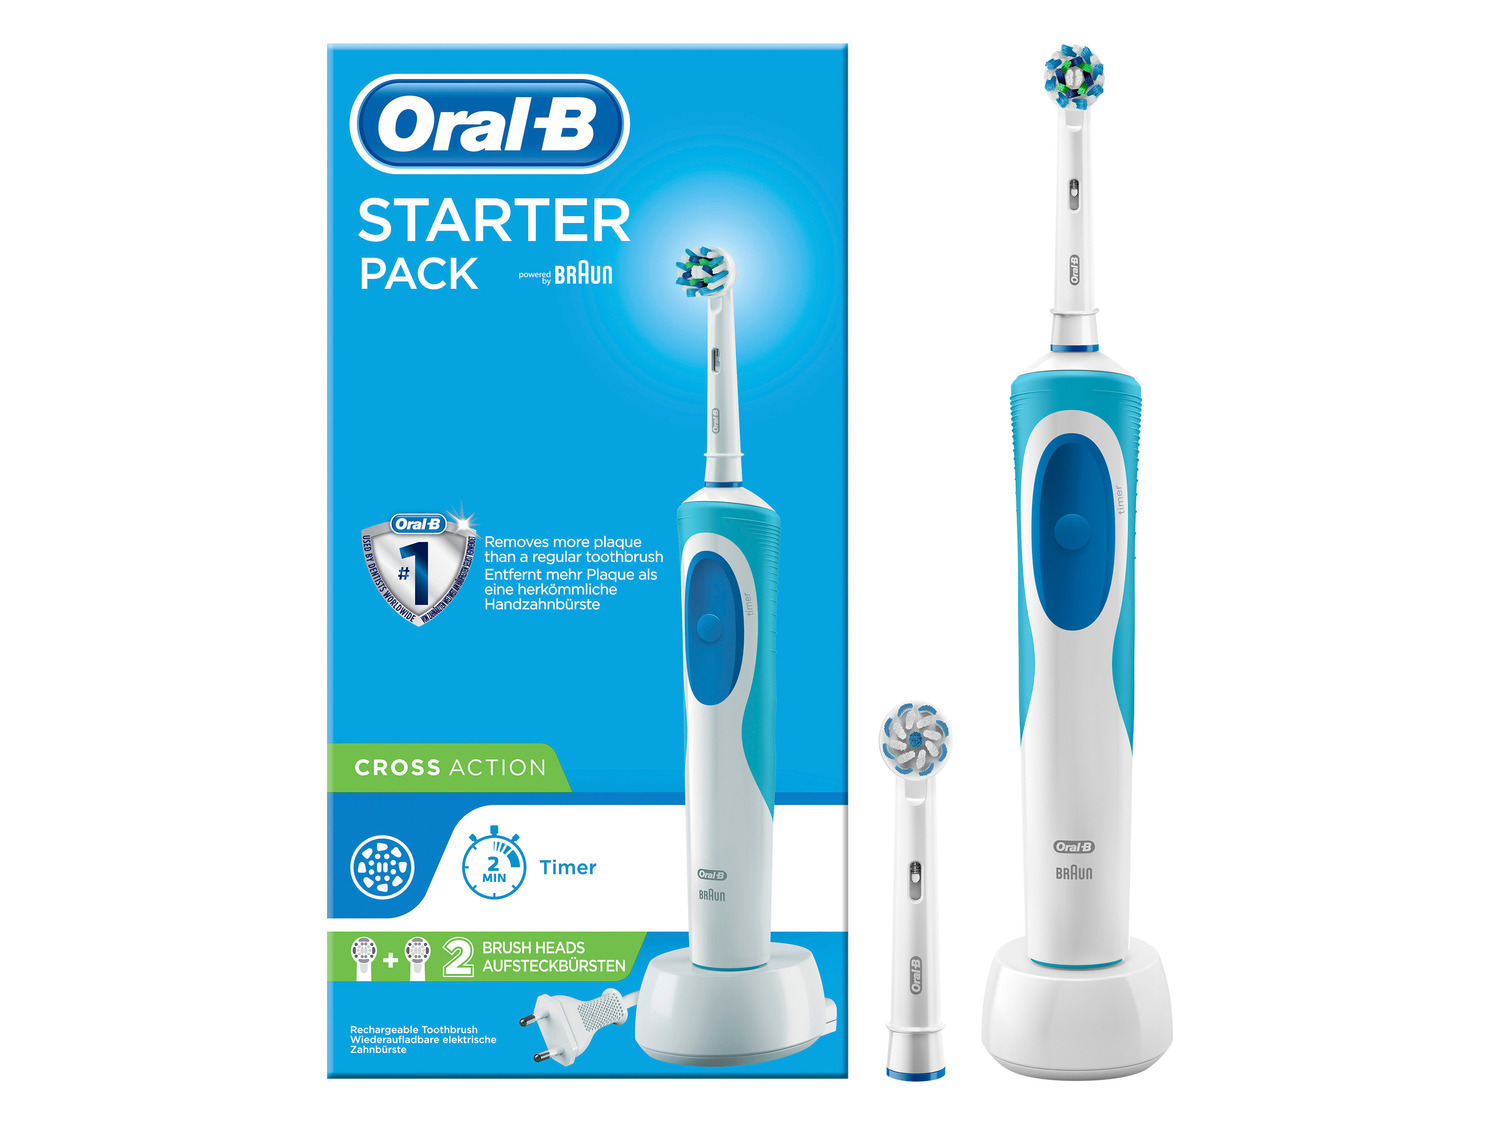 spanning in verlegenheid gebracht Symptomen Oral-B Elektrische tandenborstel Starterpack | Lidl.be